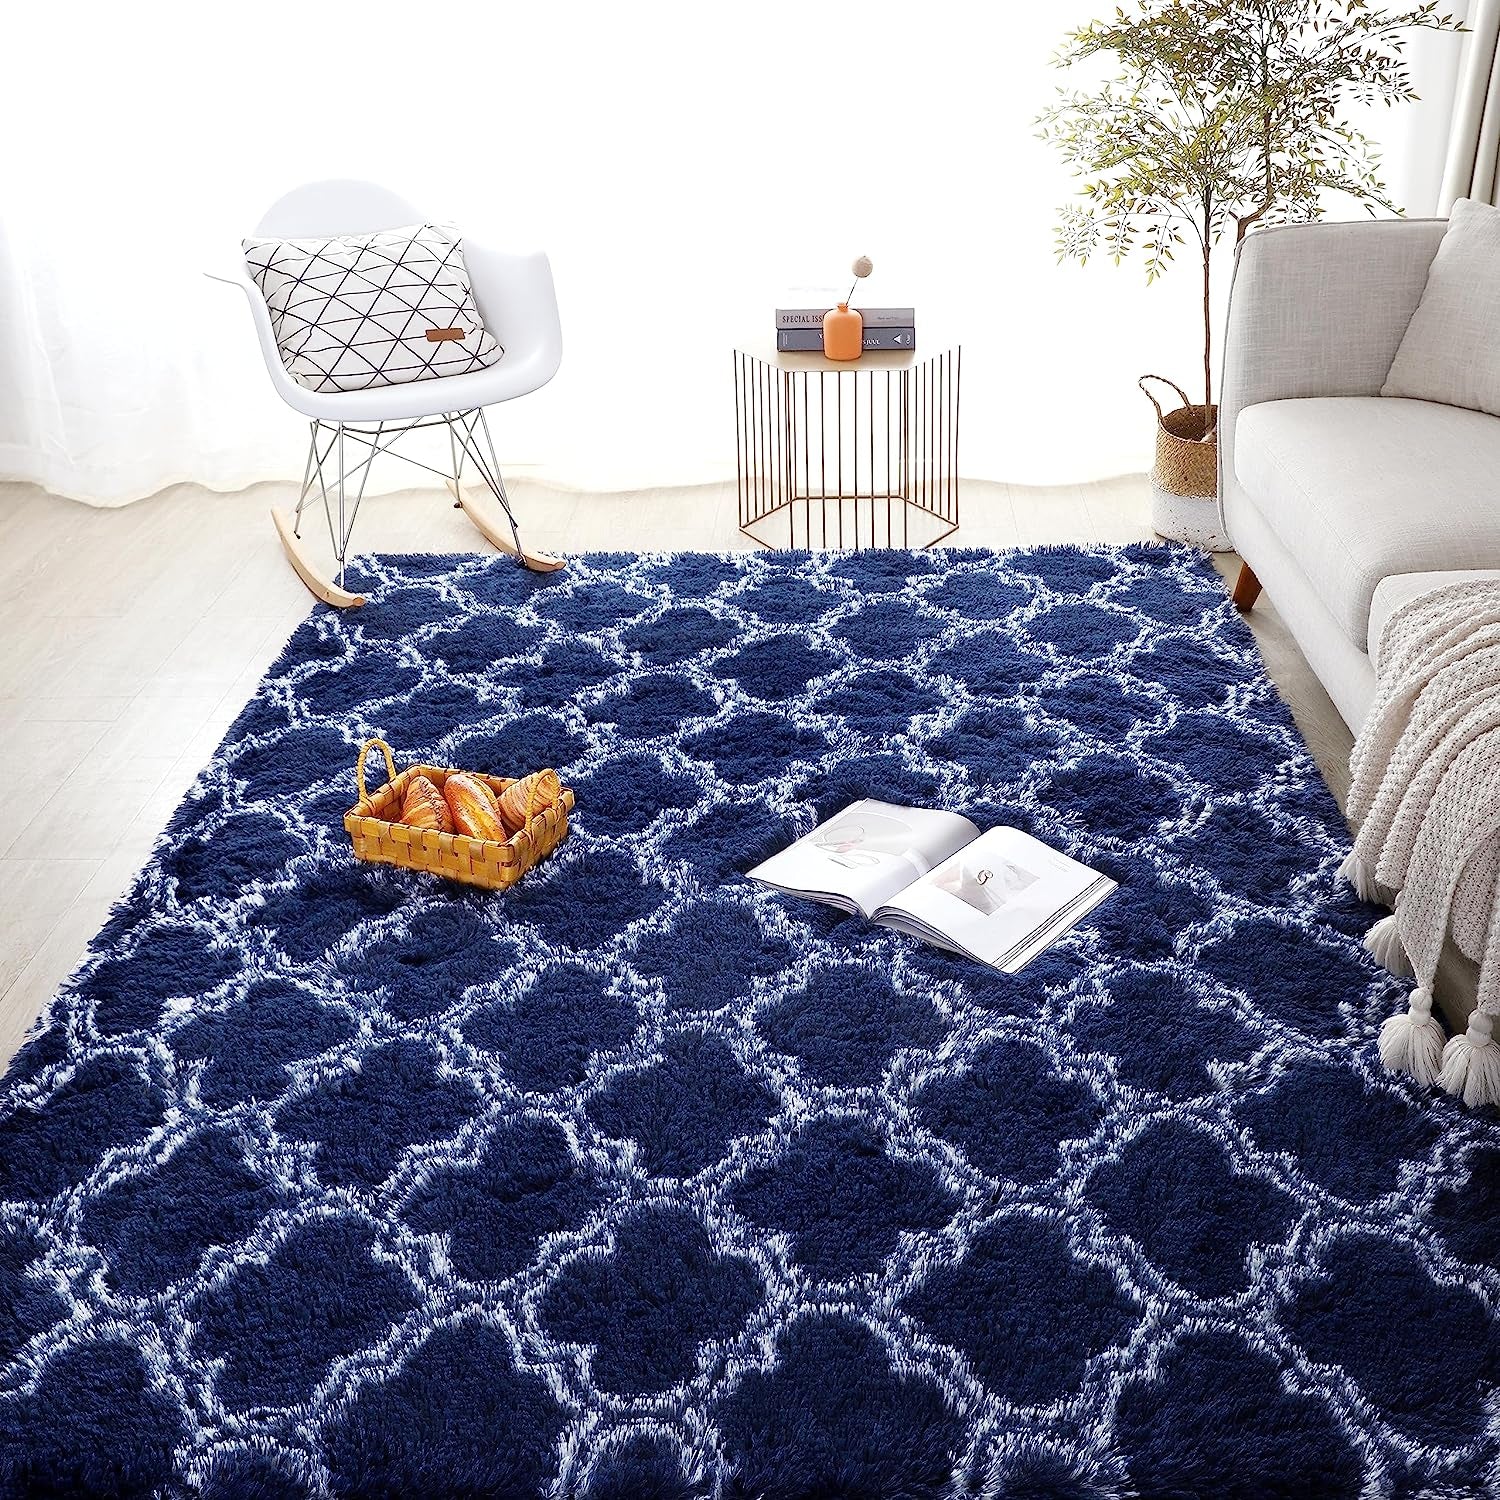 6X9 Navy Blue Carpet for Living Room Soft Luxury Bedroom Large Fluffy Plush Area Rug Shaggy Big Comfy Carpet (6X9 Feet, Navy Blue/White)